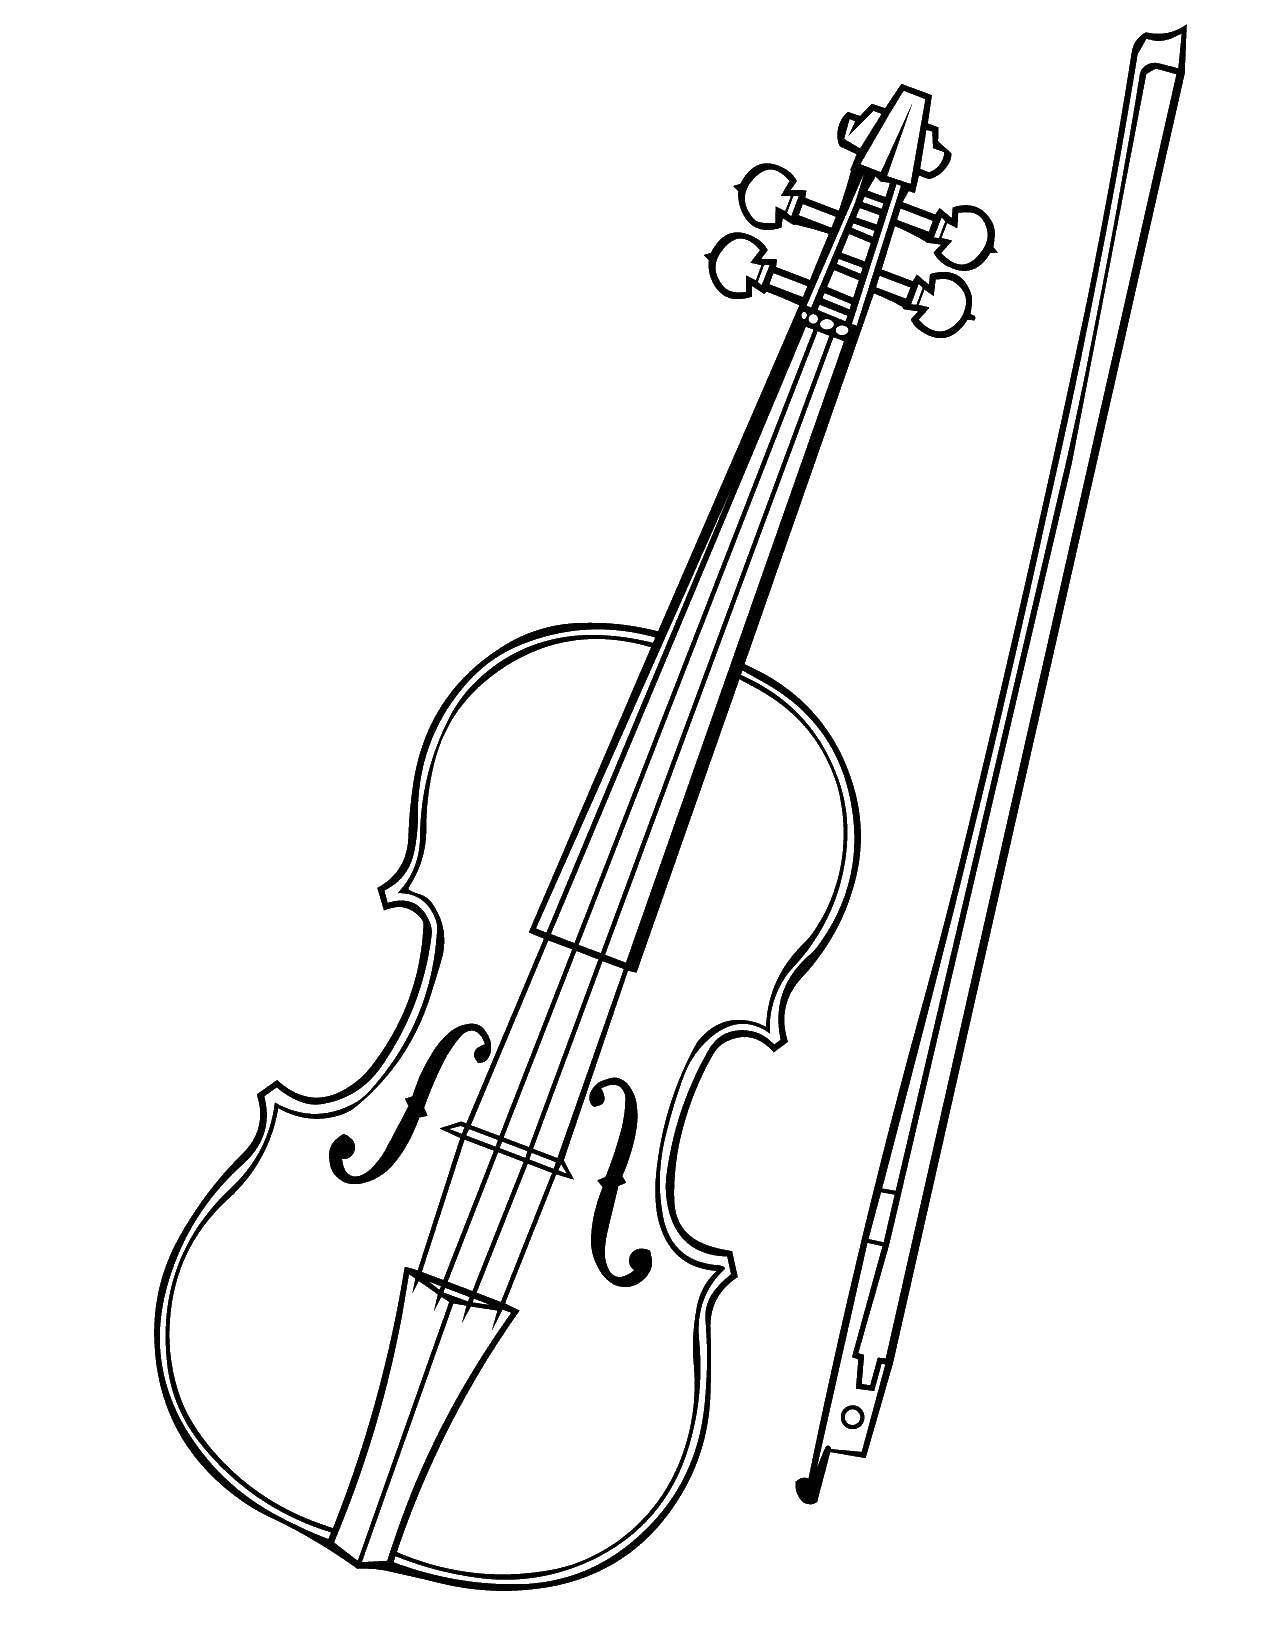 Coloring Violin musical instrument. Category Violin. Tags:  violin, strings.